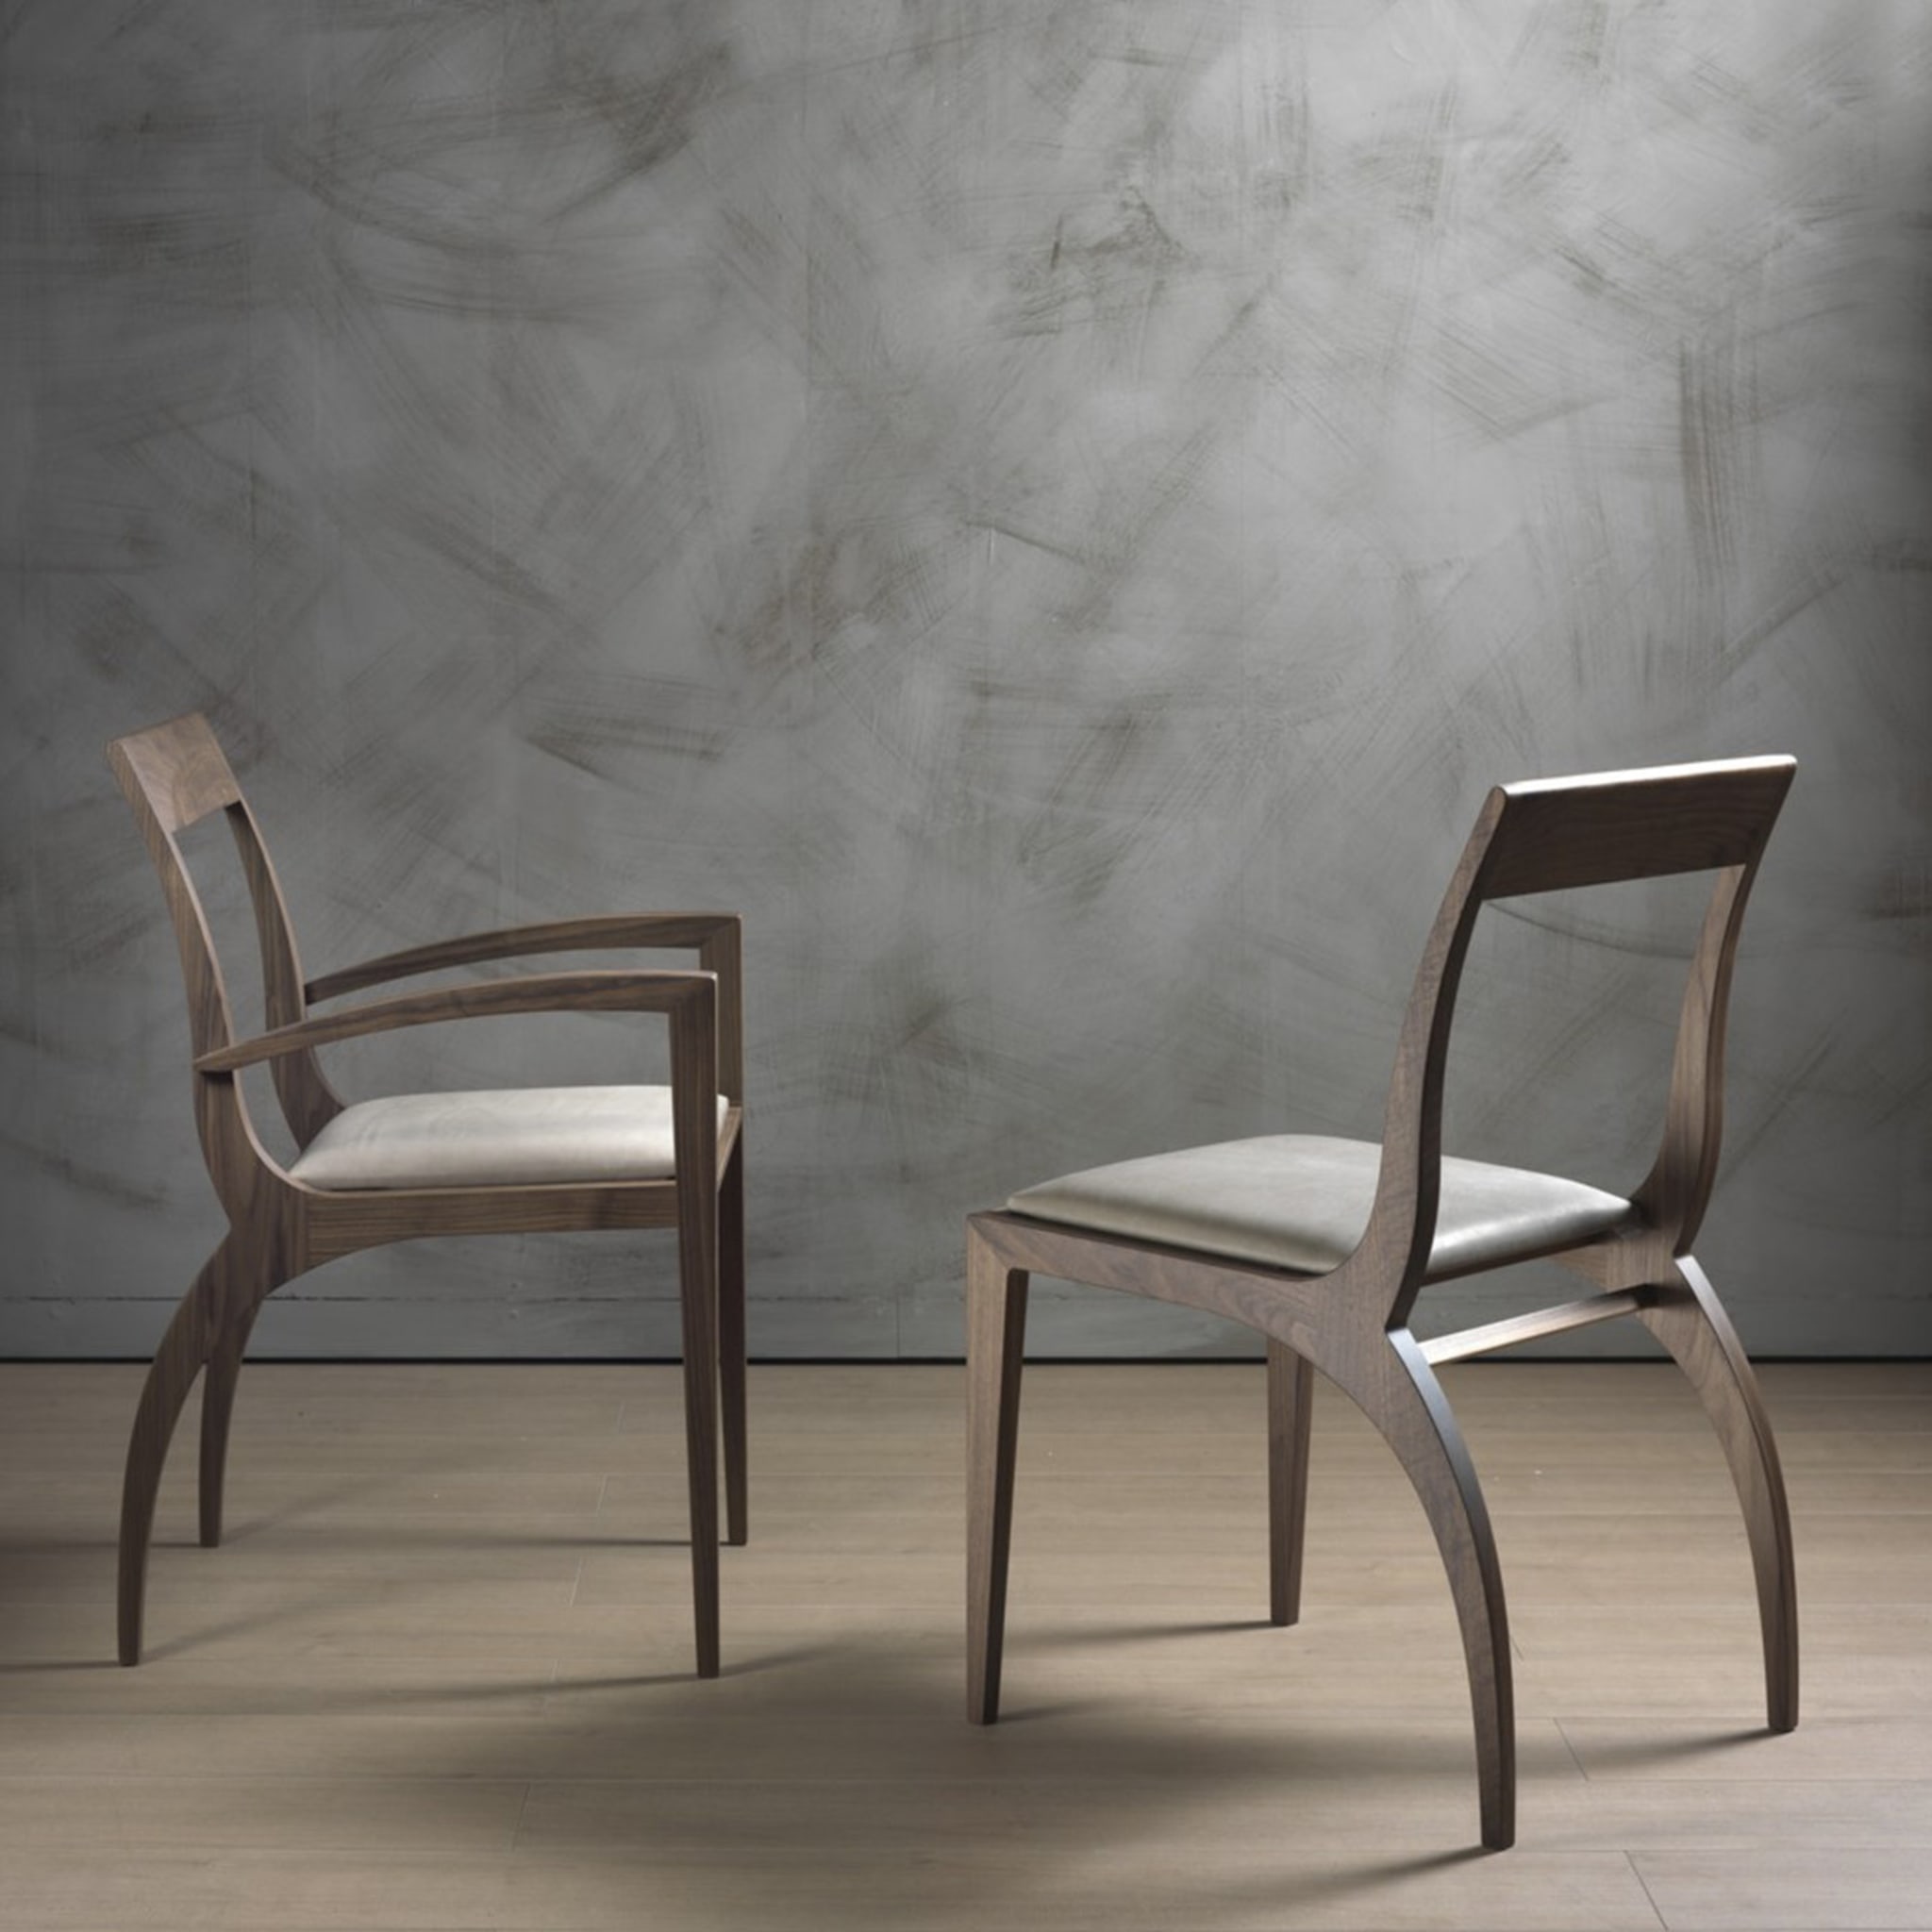 Thelma Grey Chair by Fabio Rebosio - Alternative view 2